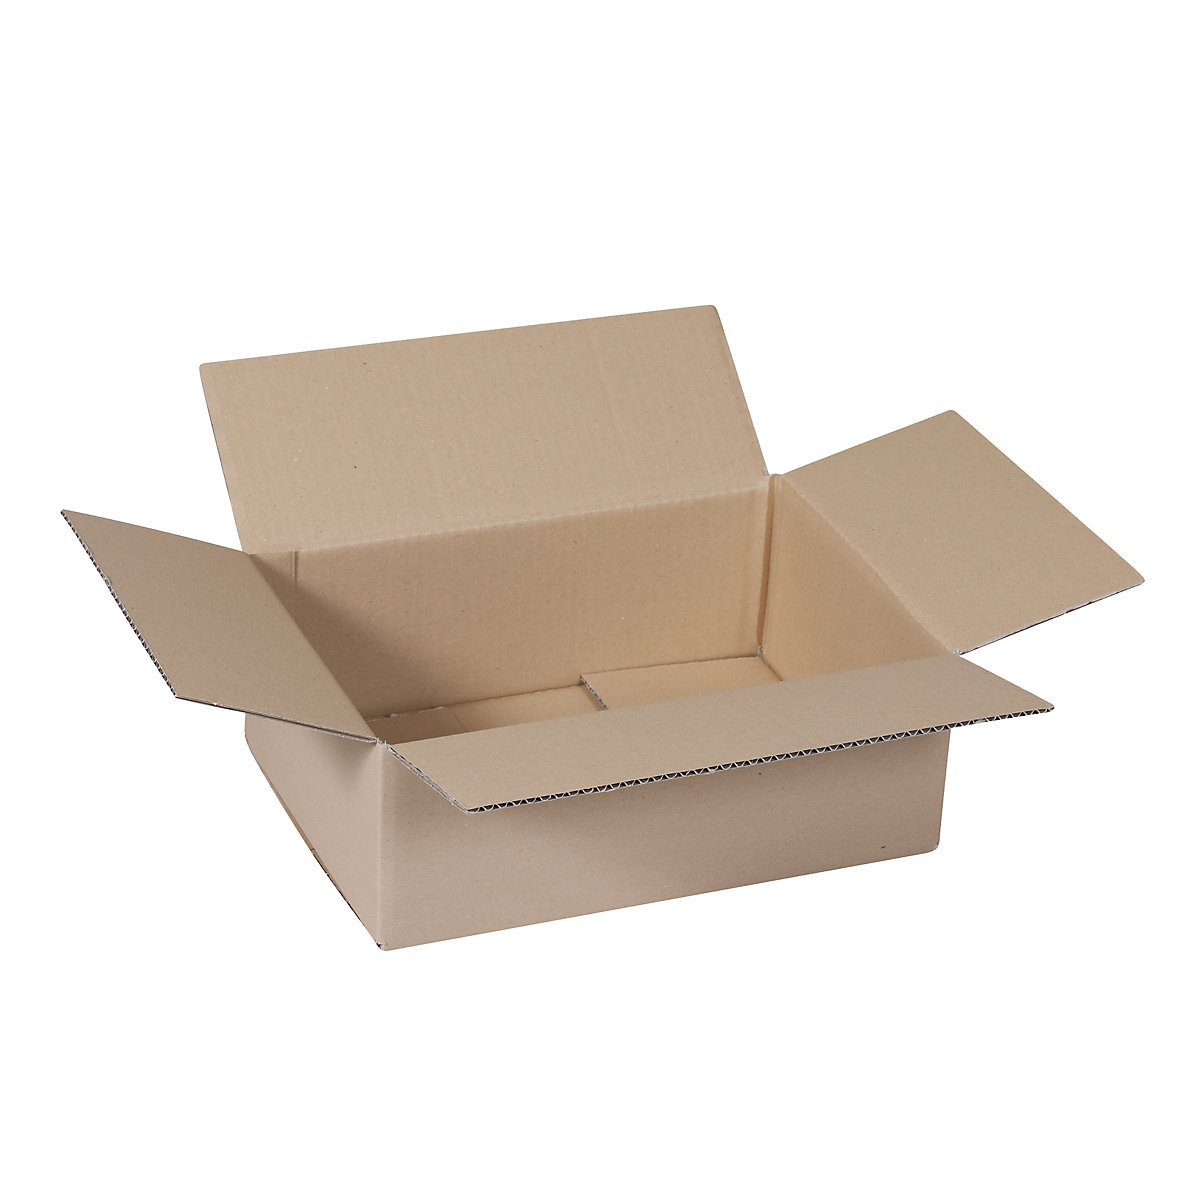 Folding cardboard box, FEFCO 0201, made of single fluted cardboard, internal dimensions 350 x 250 x 120 mm, pack of 50-7